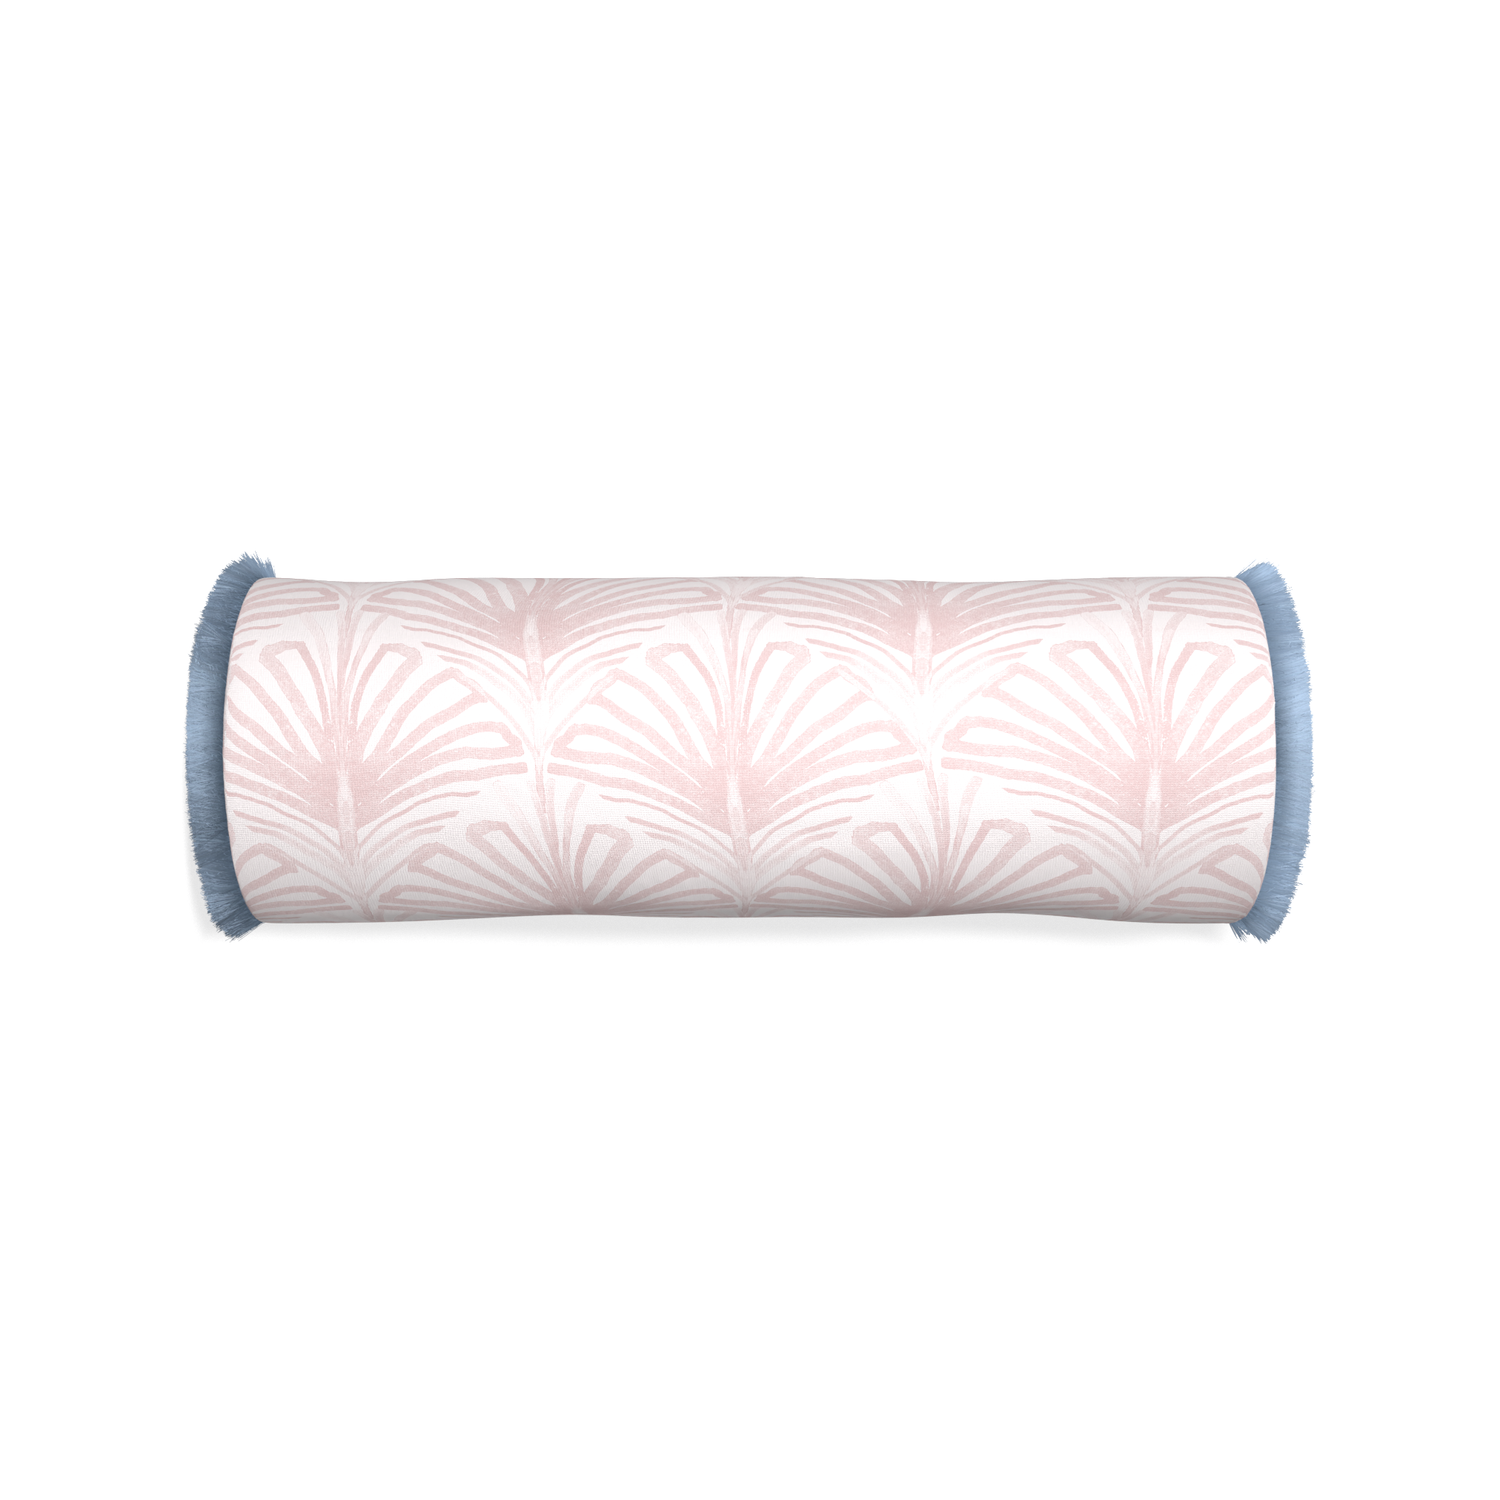 Bolster suzy rose custom pillow with sky fringe on white background